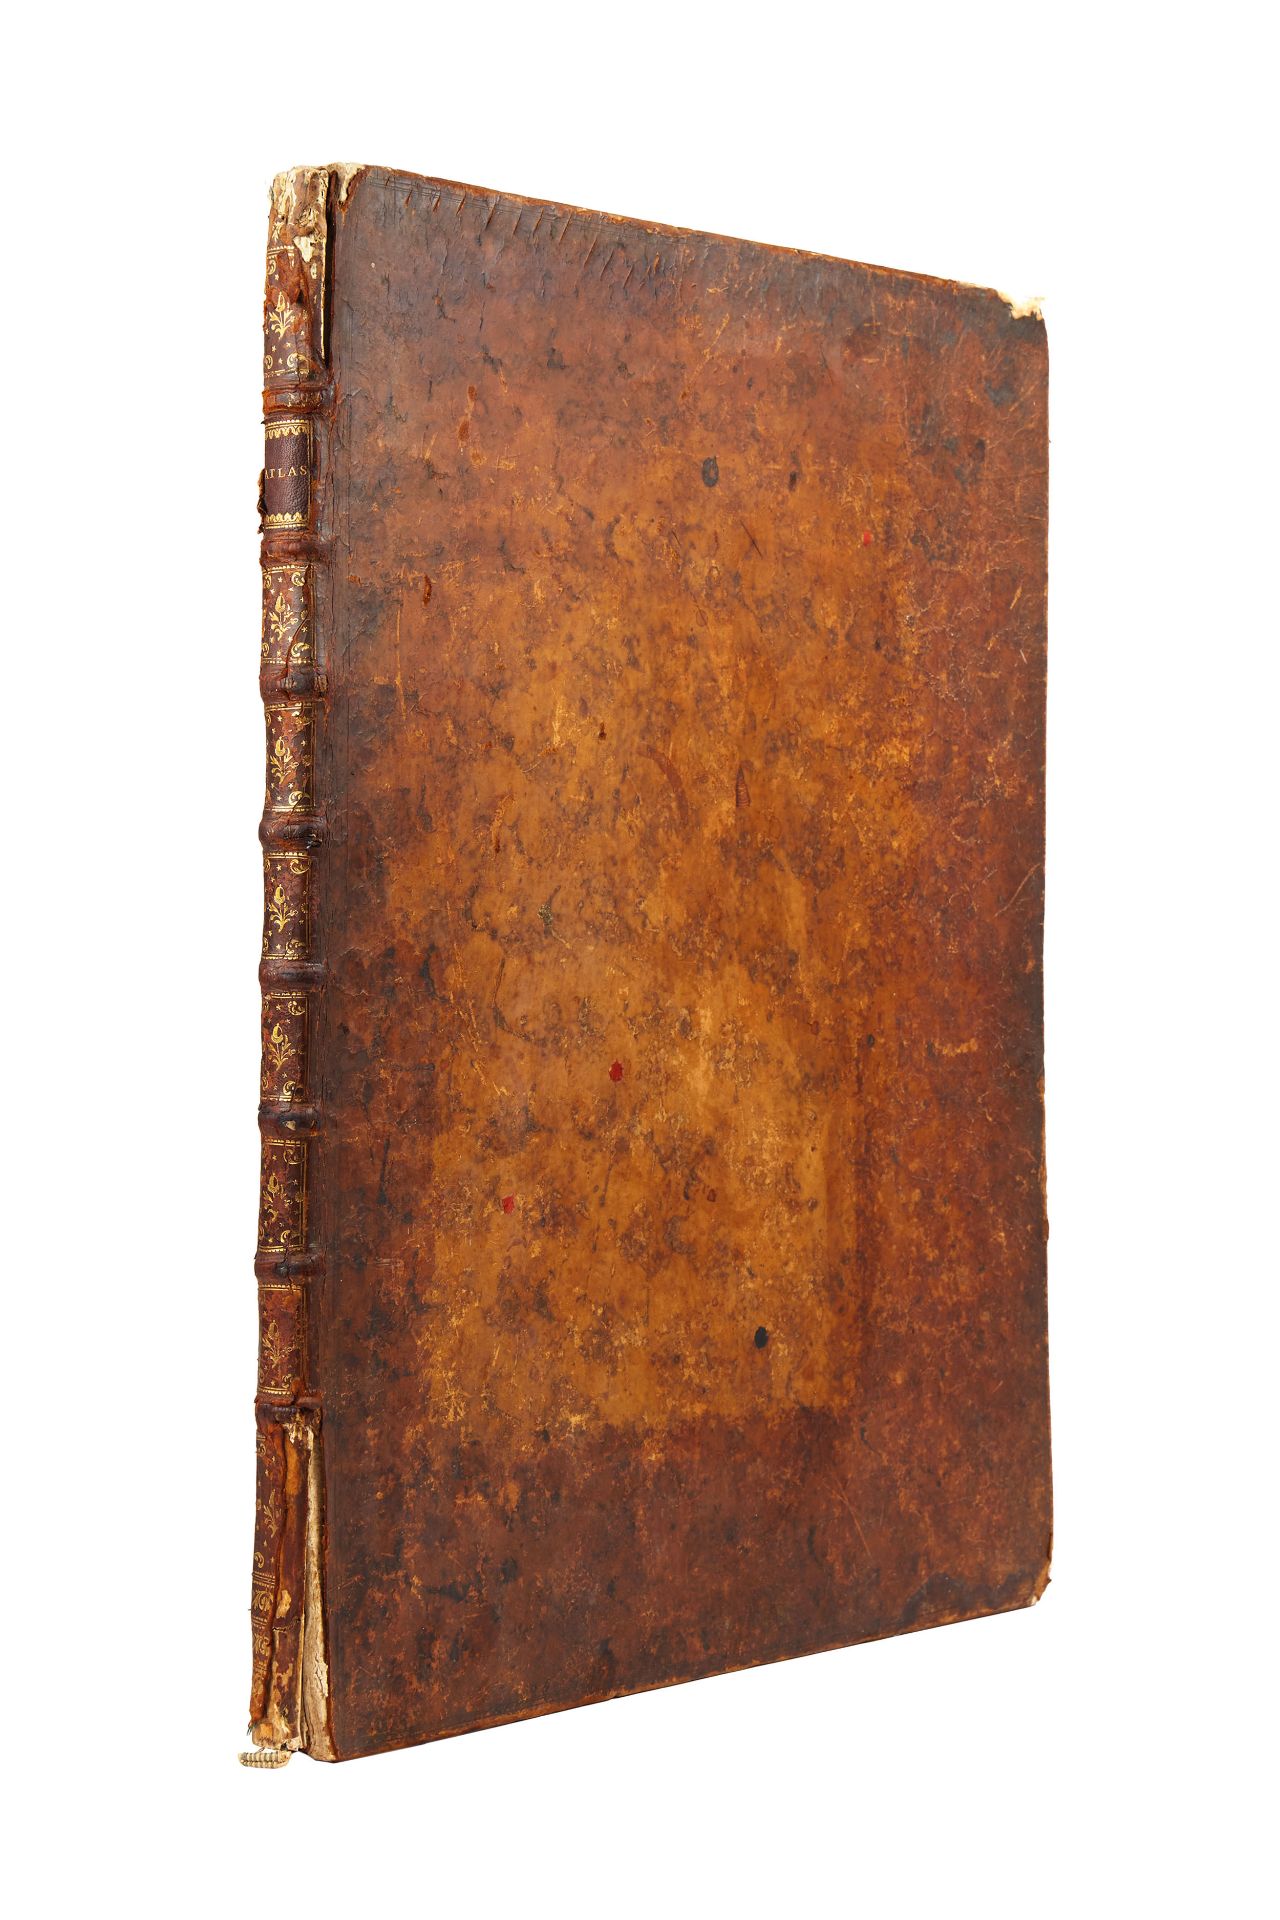 [PORTOLAN] BELLIN, Jacques Nicolas (1703-1772); CASSINI DE THURY C?sar-François; . Portolan atlas - Bild 4 aus 4